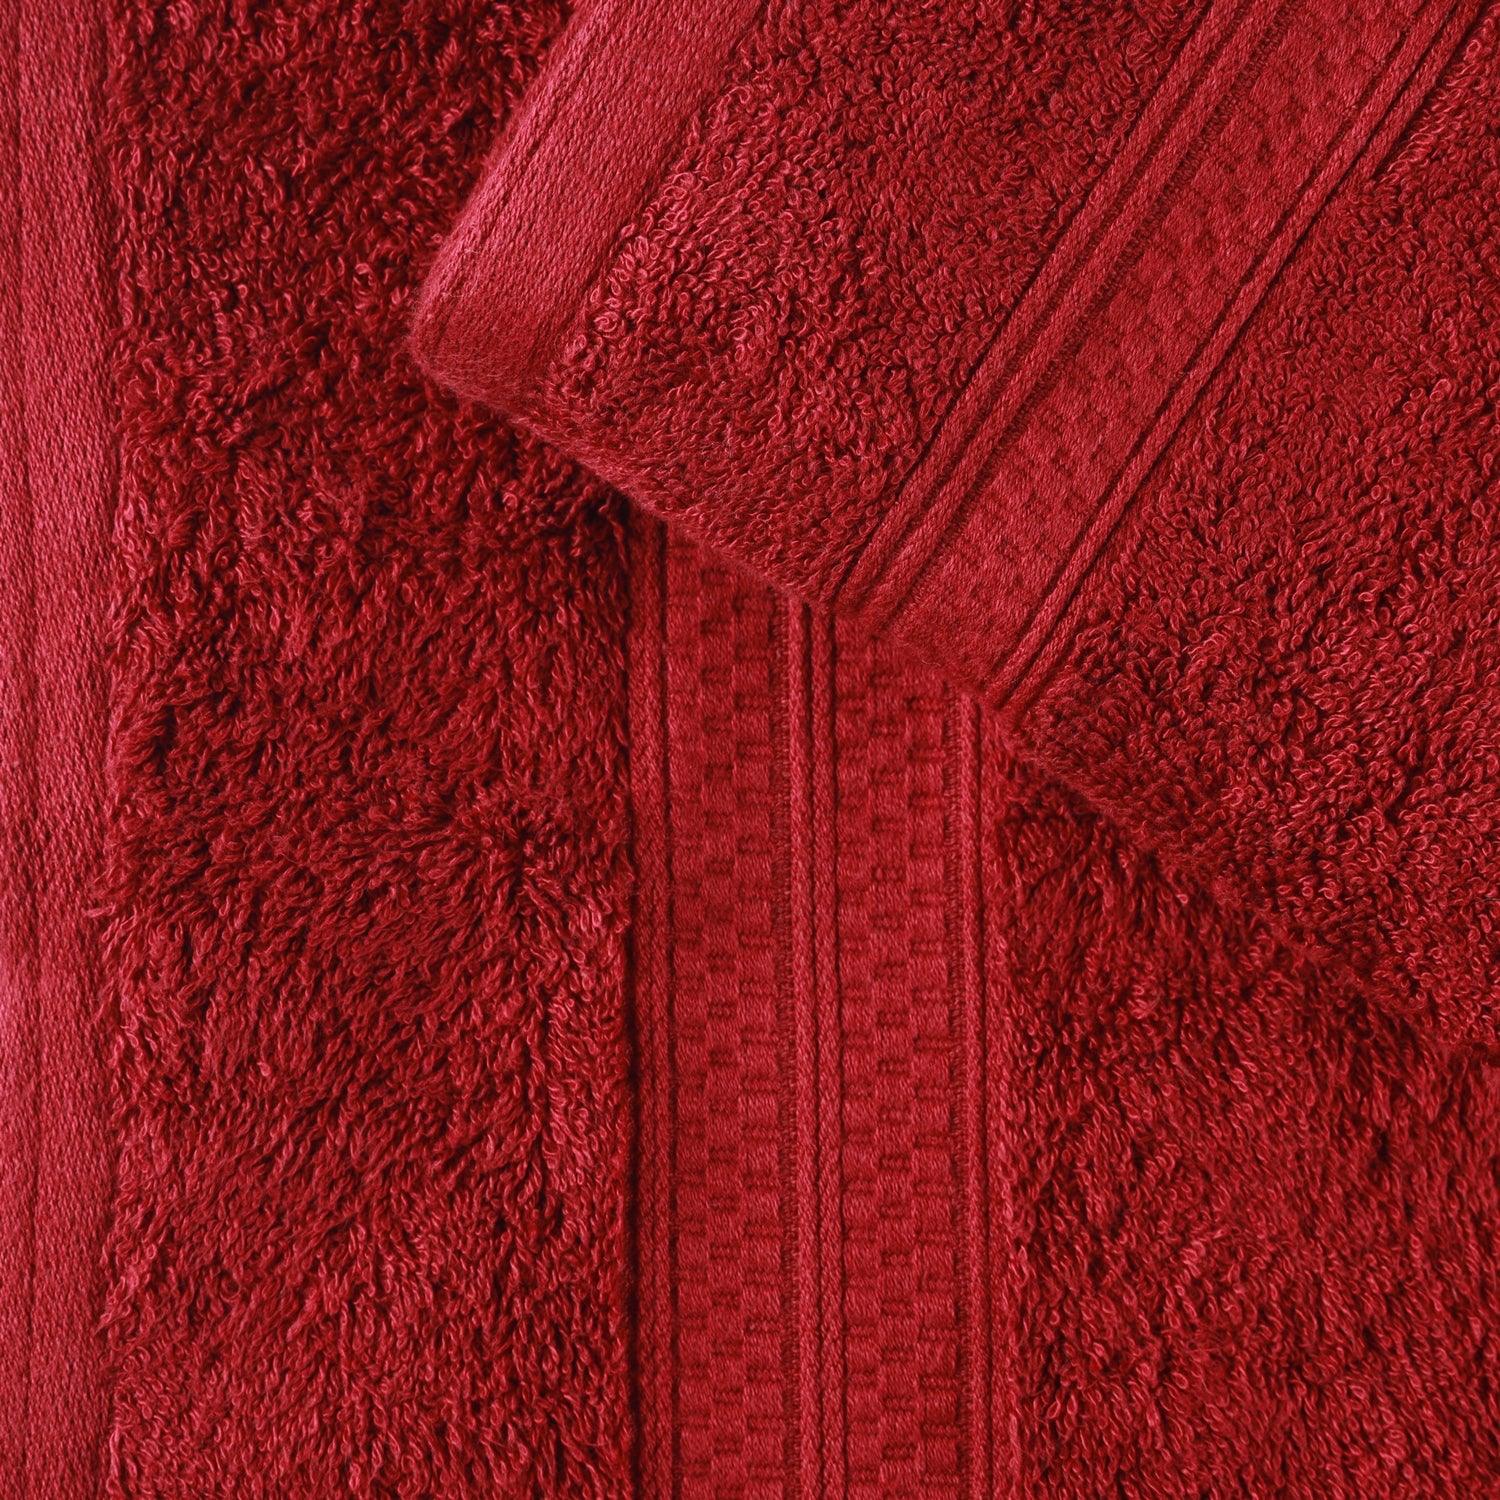 Rayon from Bamboo Ultra-Plush Heavyweight Assorted 6-Piece Towel Set - Crimson